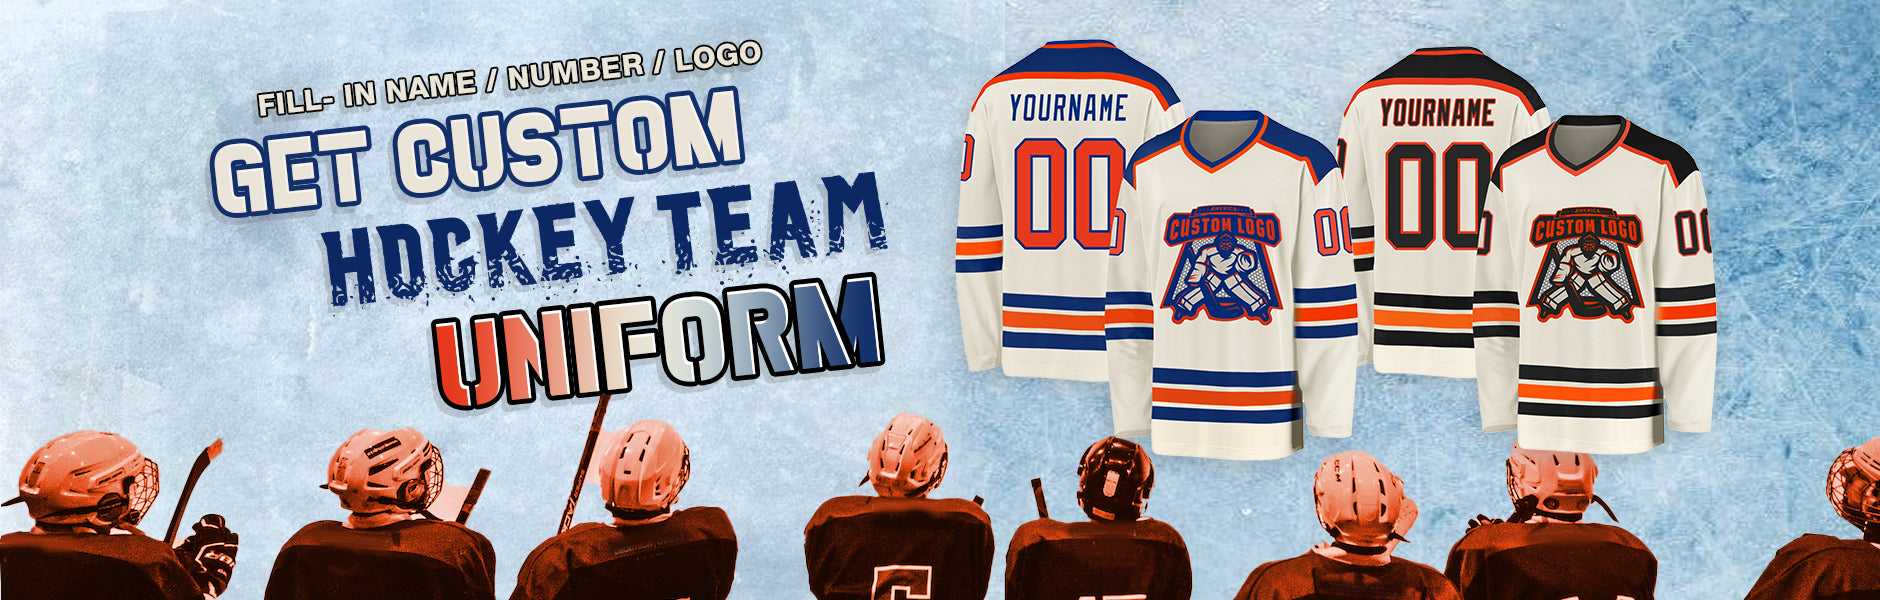 custom hockey cream jersey